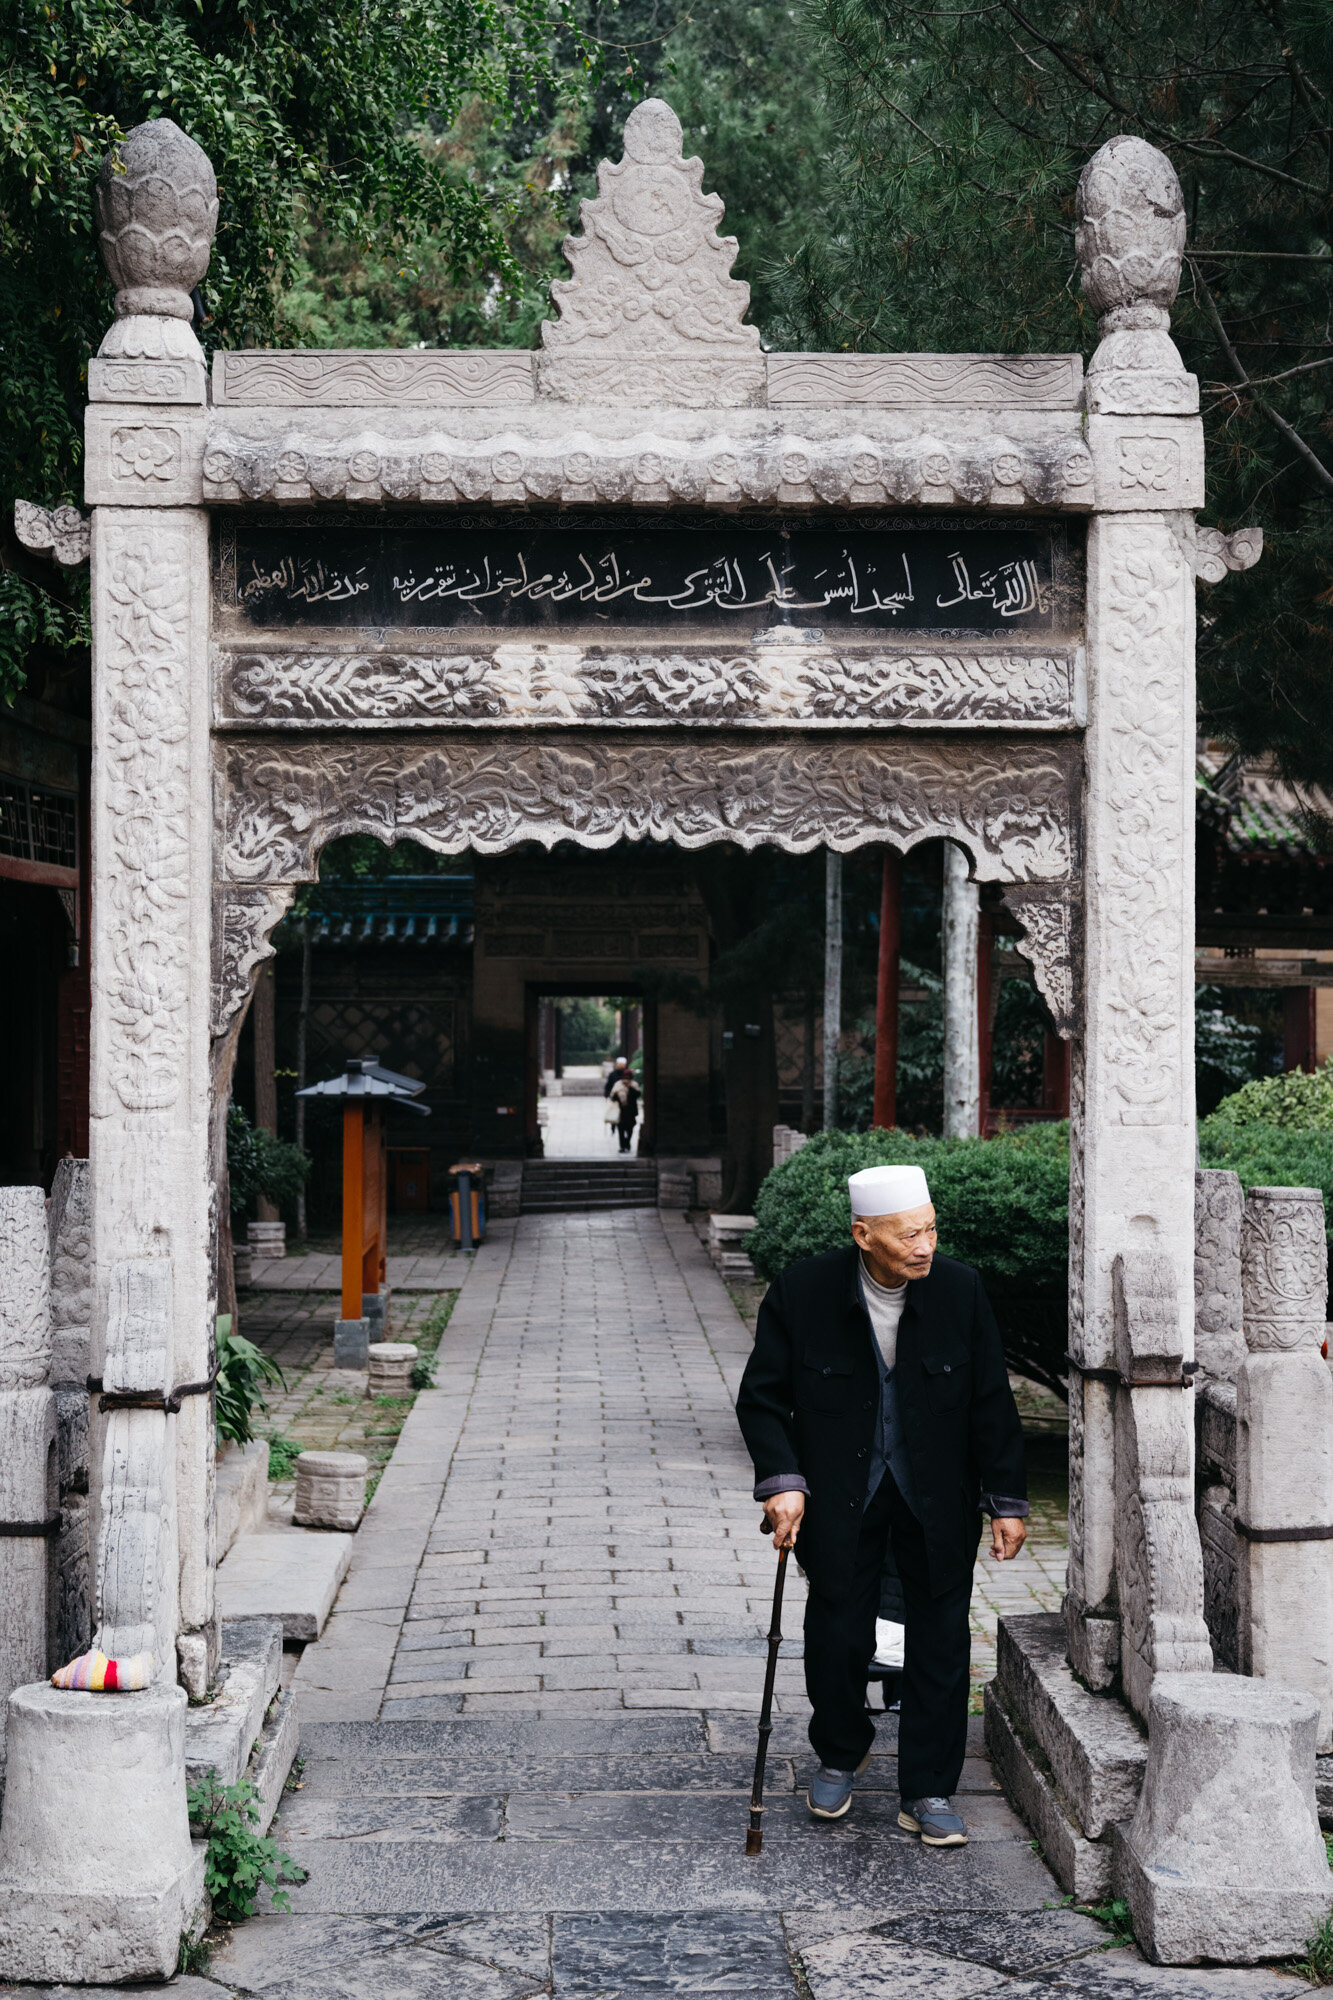  A man heeding the call to prayer. Arabic script can be seen on the gateway he walks through. 